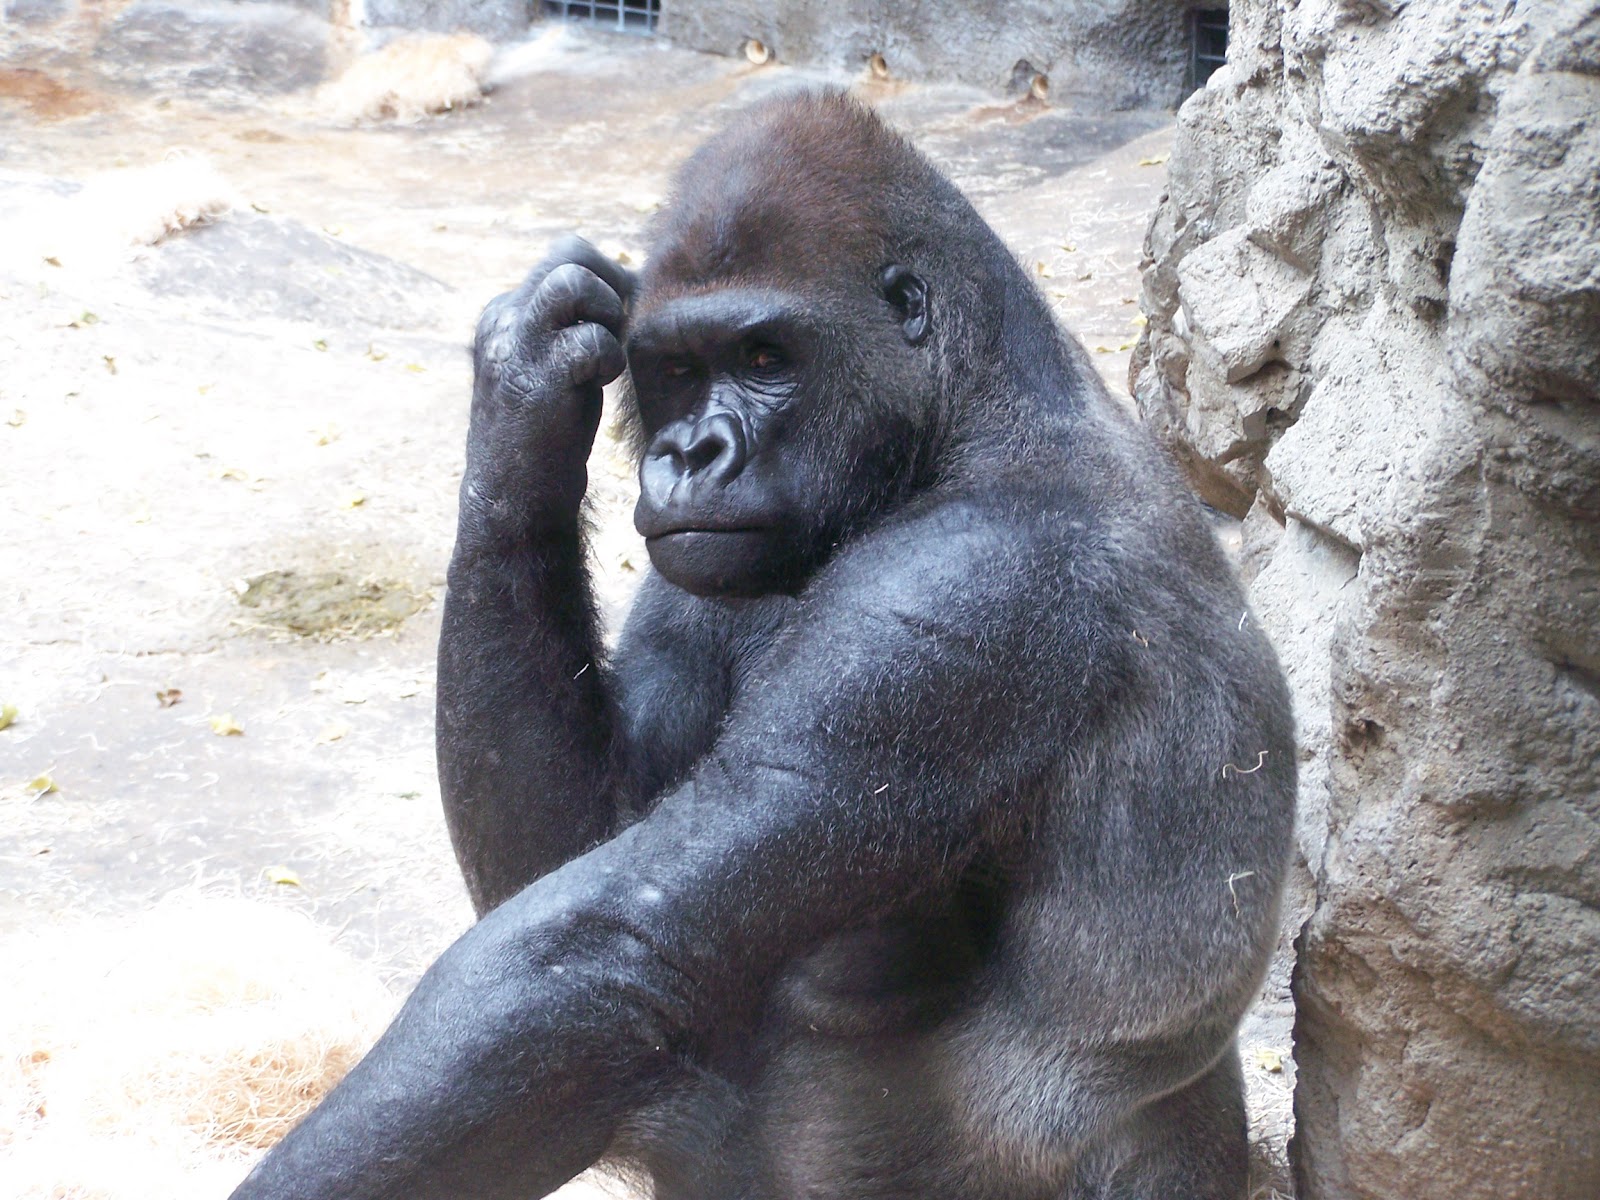 Koga the Gorilla celebrates his 30th birthday – and you’re invited!